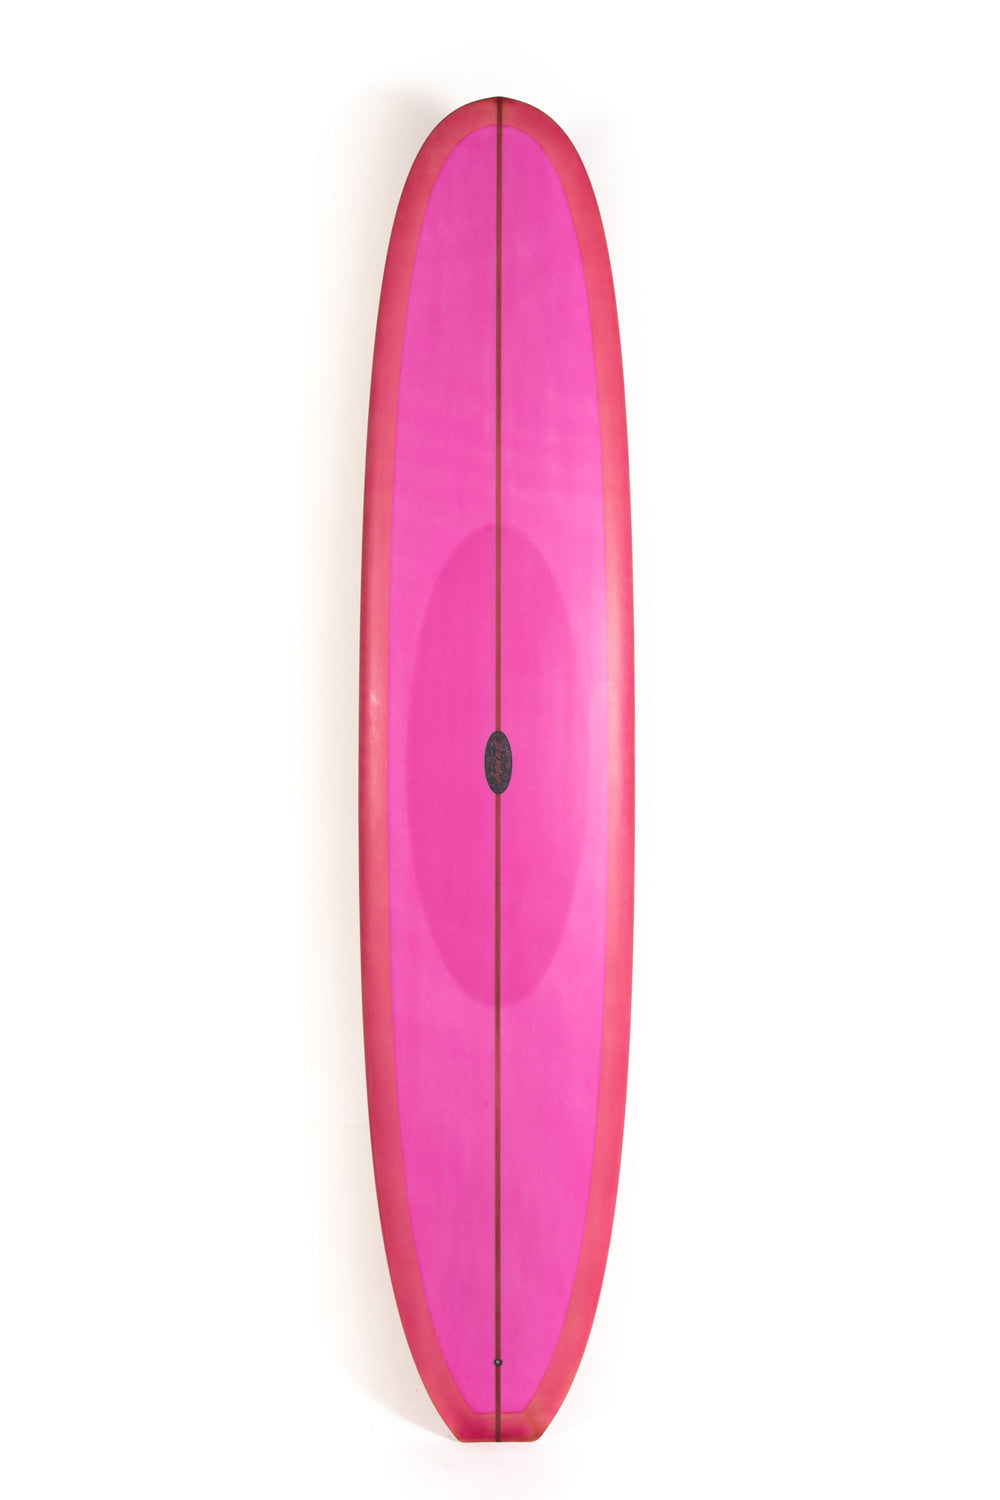 Pukas Surfboards - MAYFLOWER by Axel Lorentz -  9'2